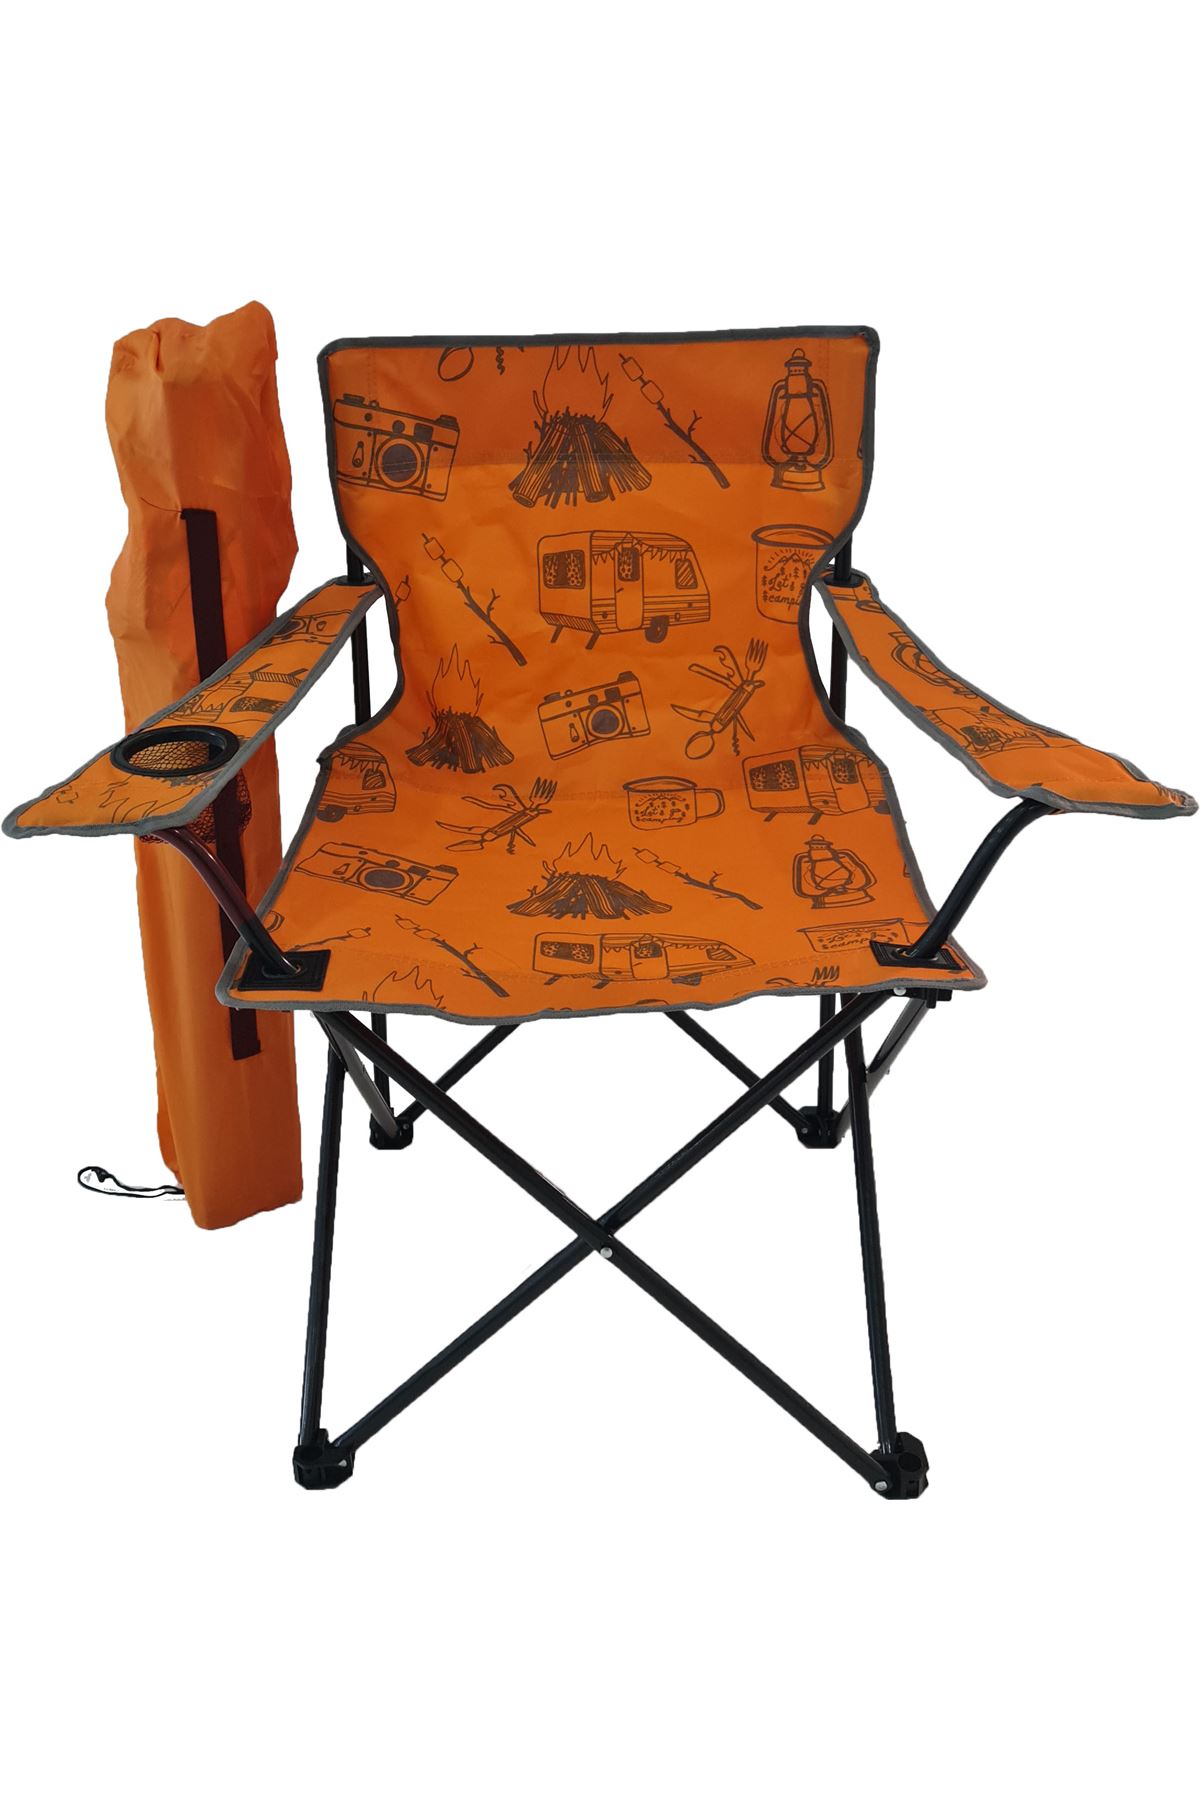 Bofigo Camping Chair Folding Chair Garden Chair Picnic Beach Balcony Chair Patterned Orange